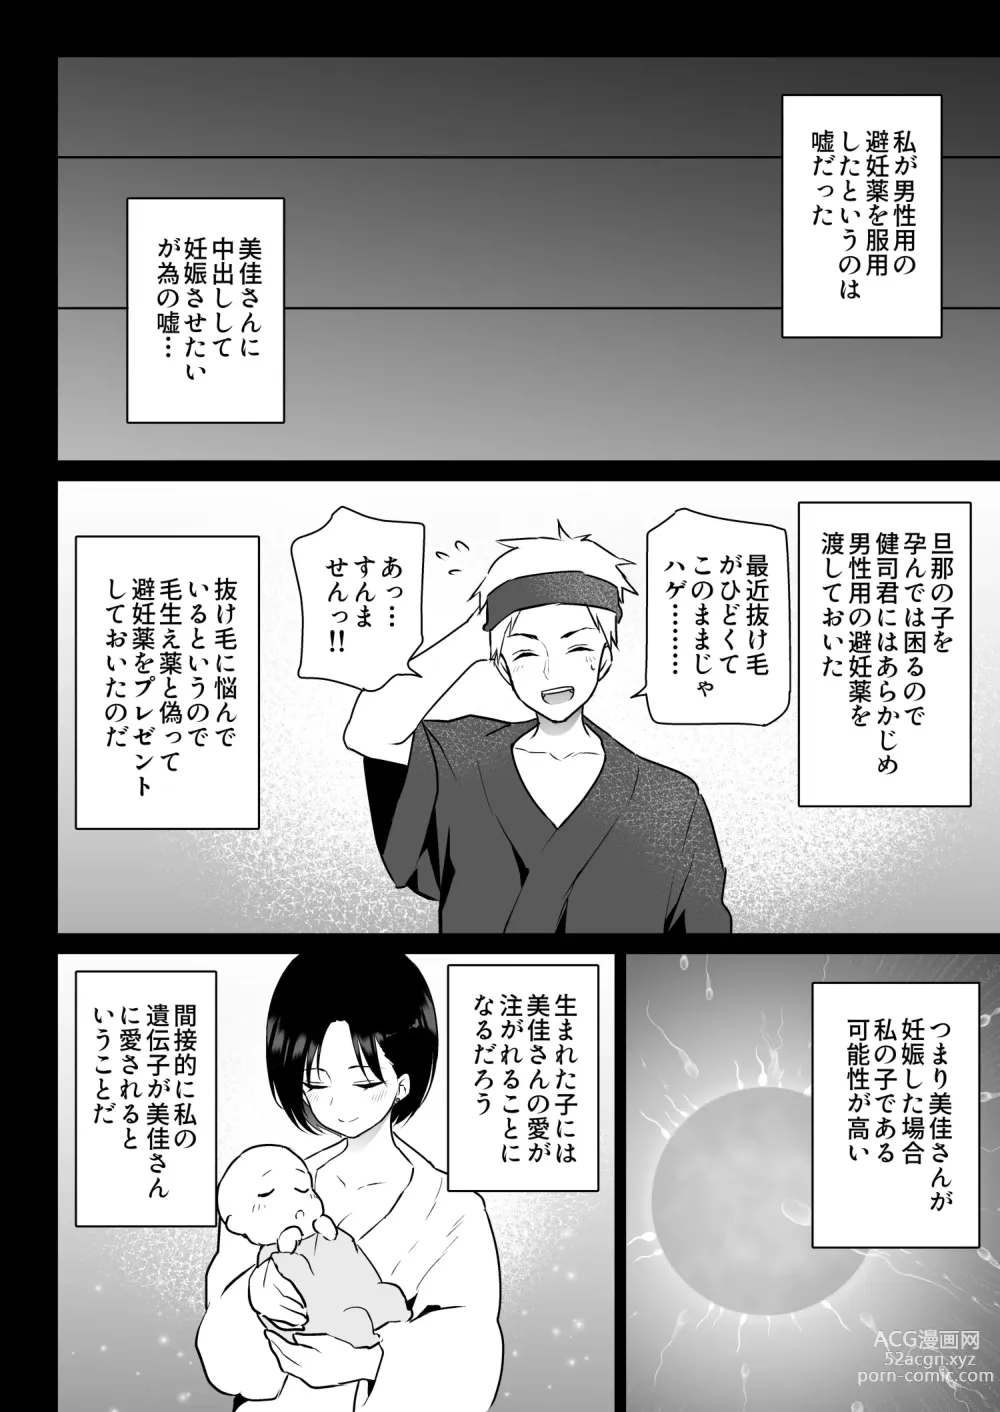 Page 73 of doujinshi Oshidori Fuufu Yakitorare